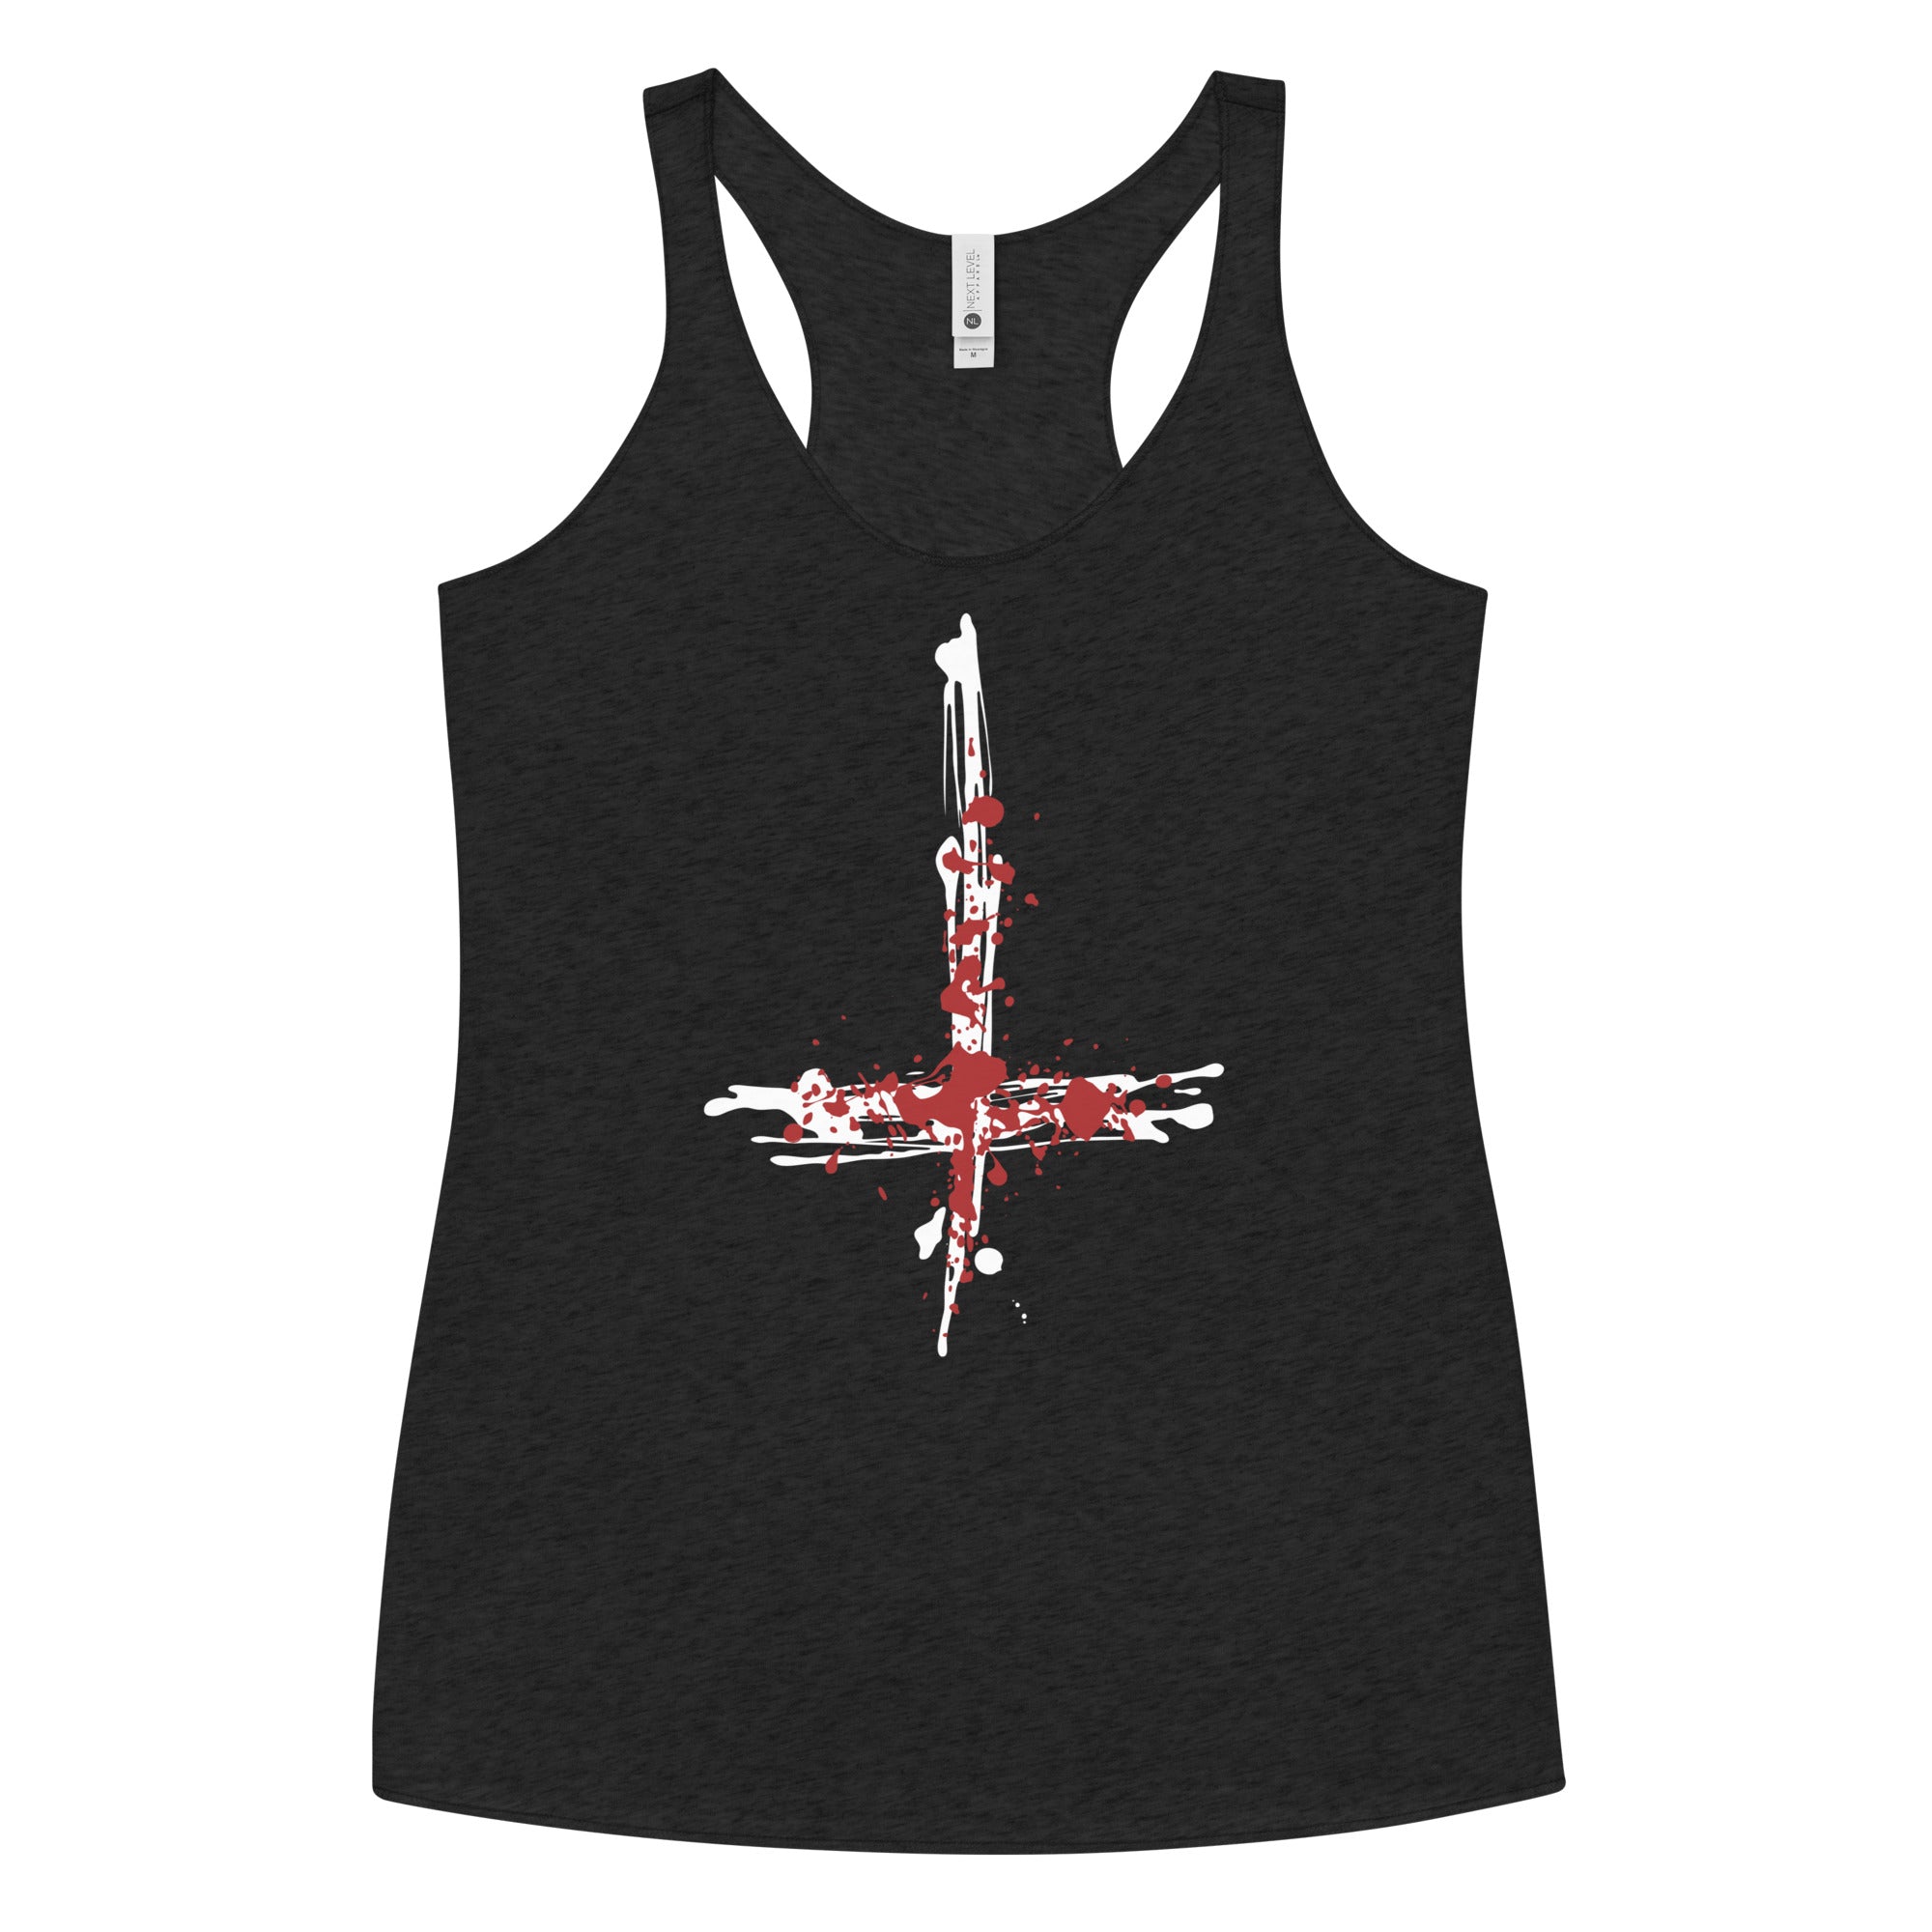 Inverted Cross Blood of Christ Women's Racerback Tank Top Shirt - Edge of Life Designs